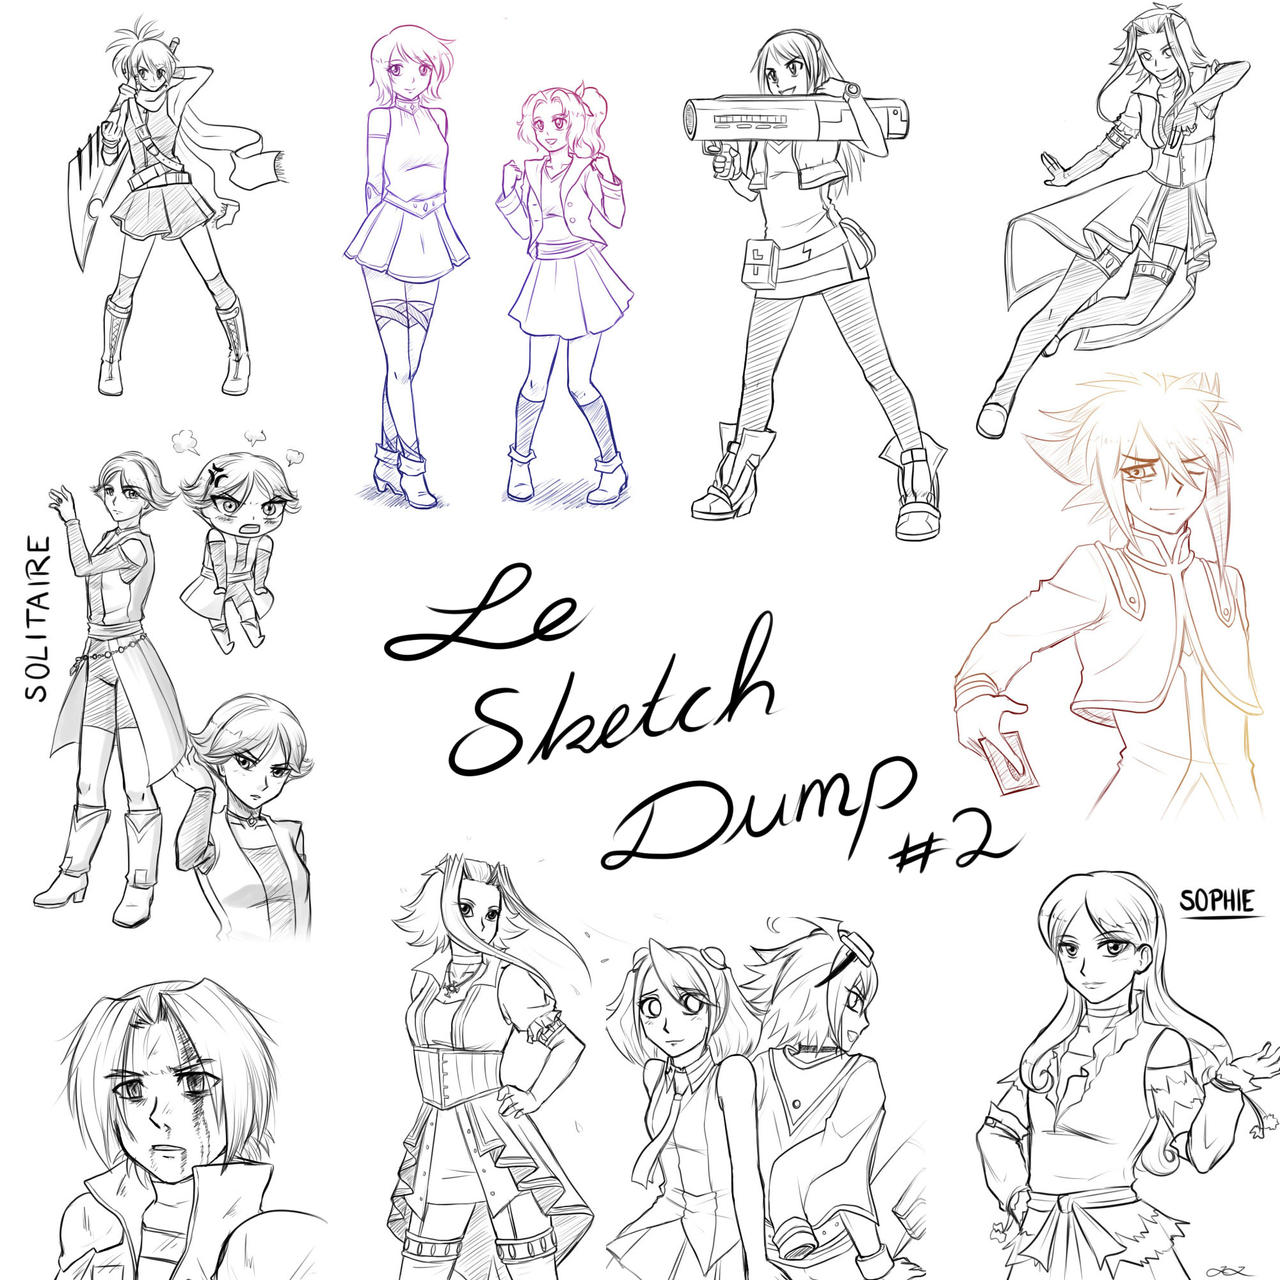 Sketch dump #2